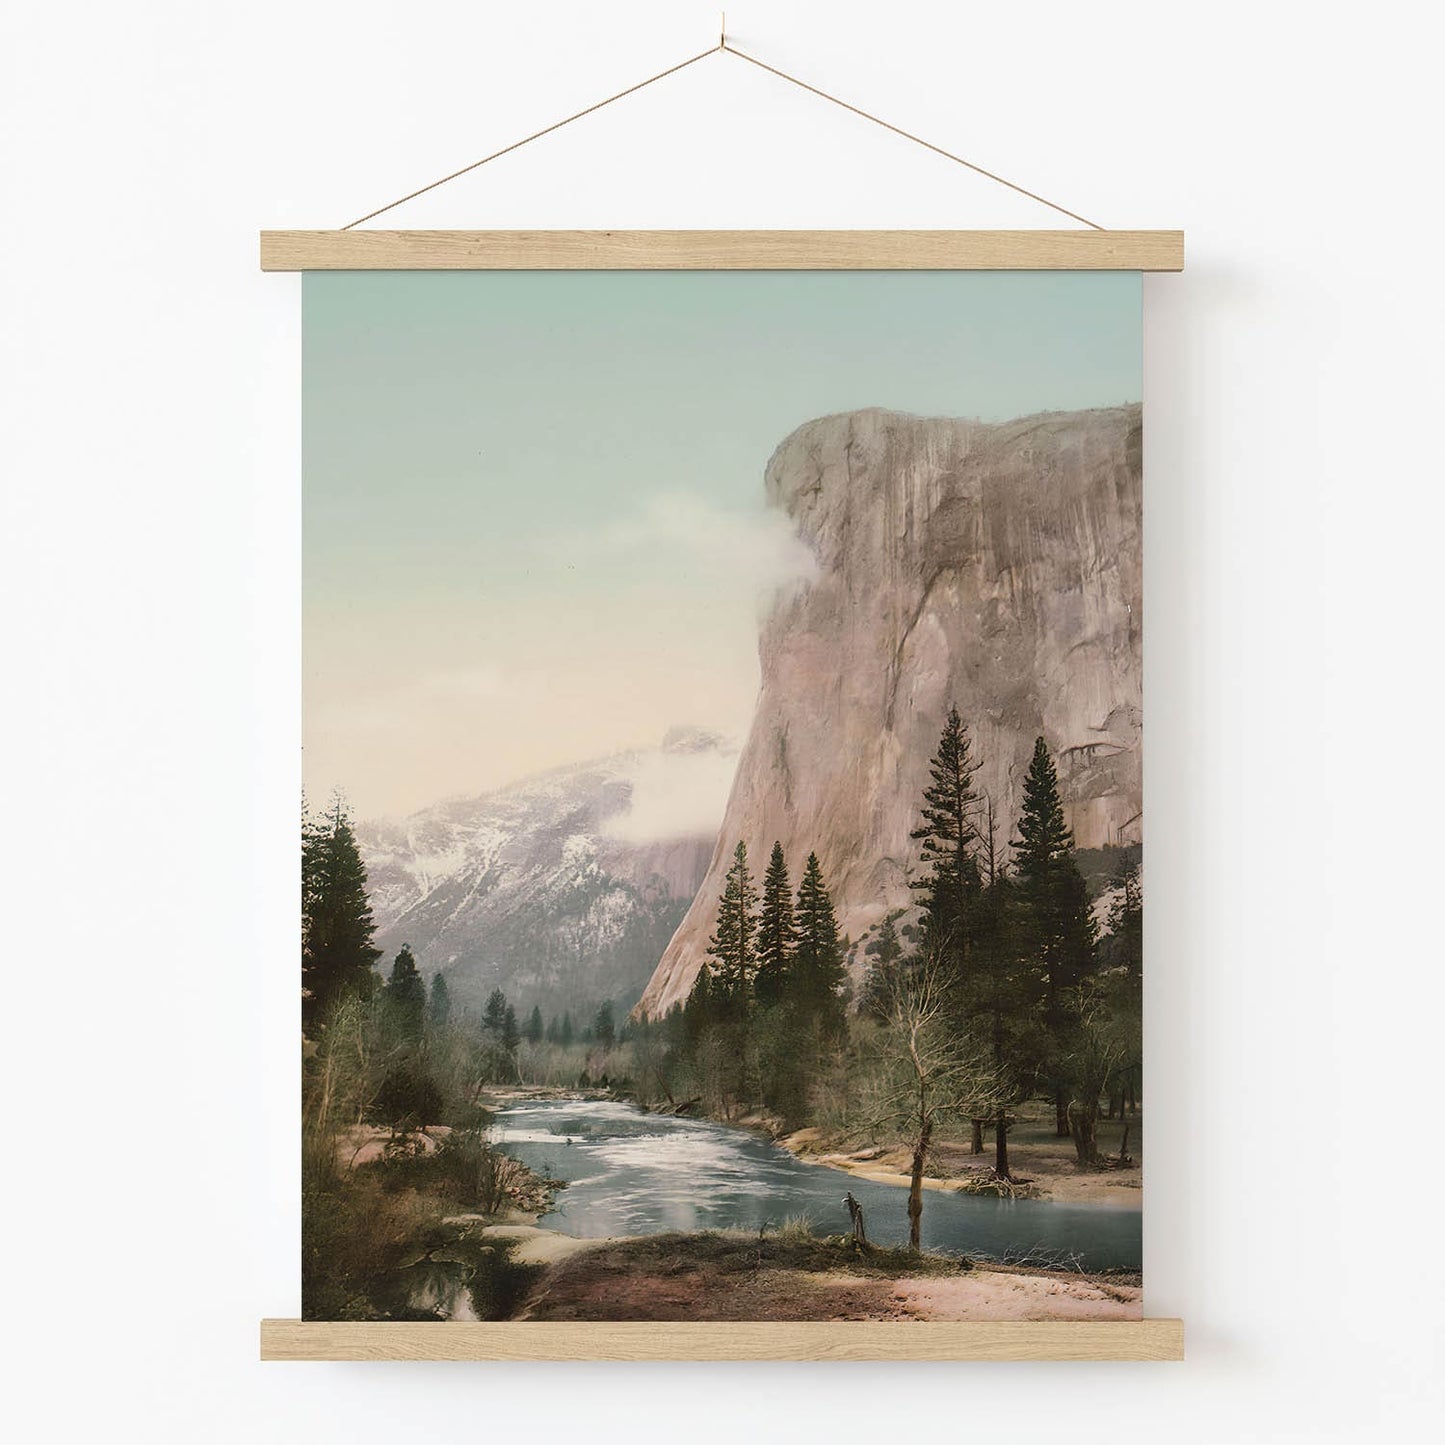 Antique National Park Art Print in Wood Hanger Frame on Wall